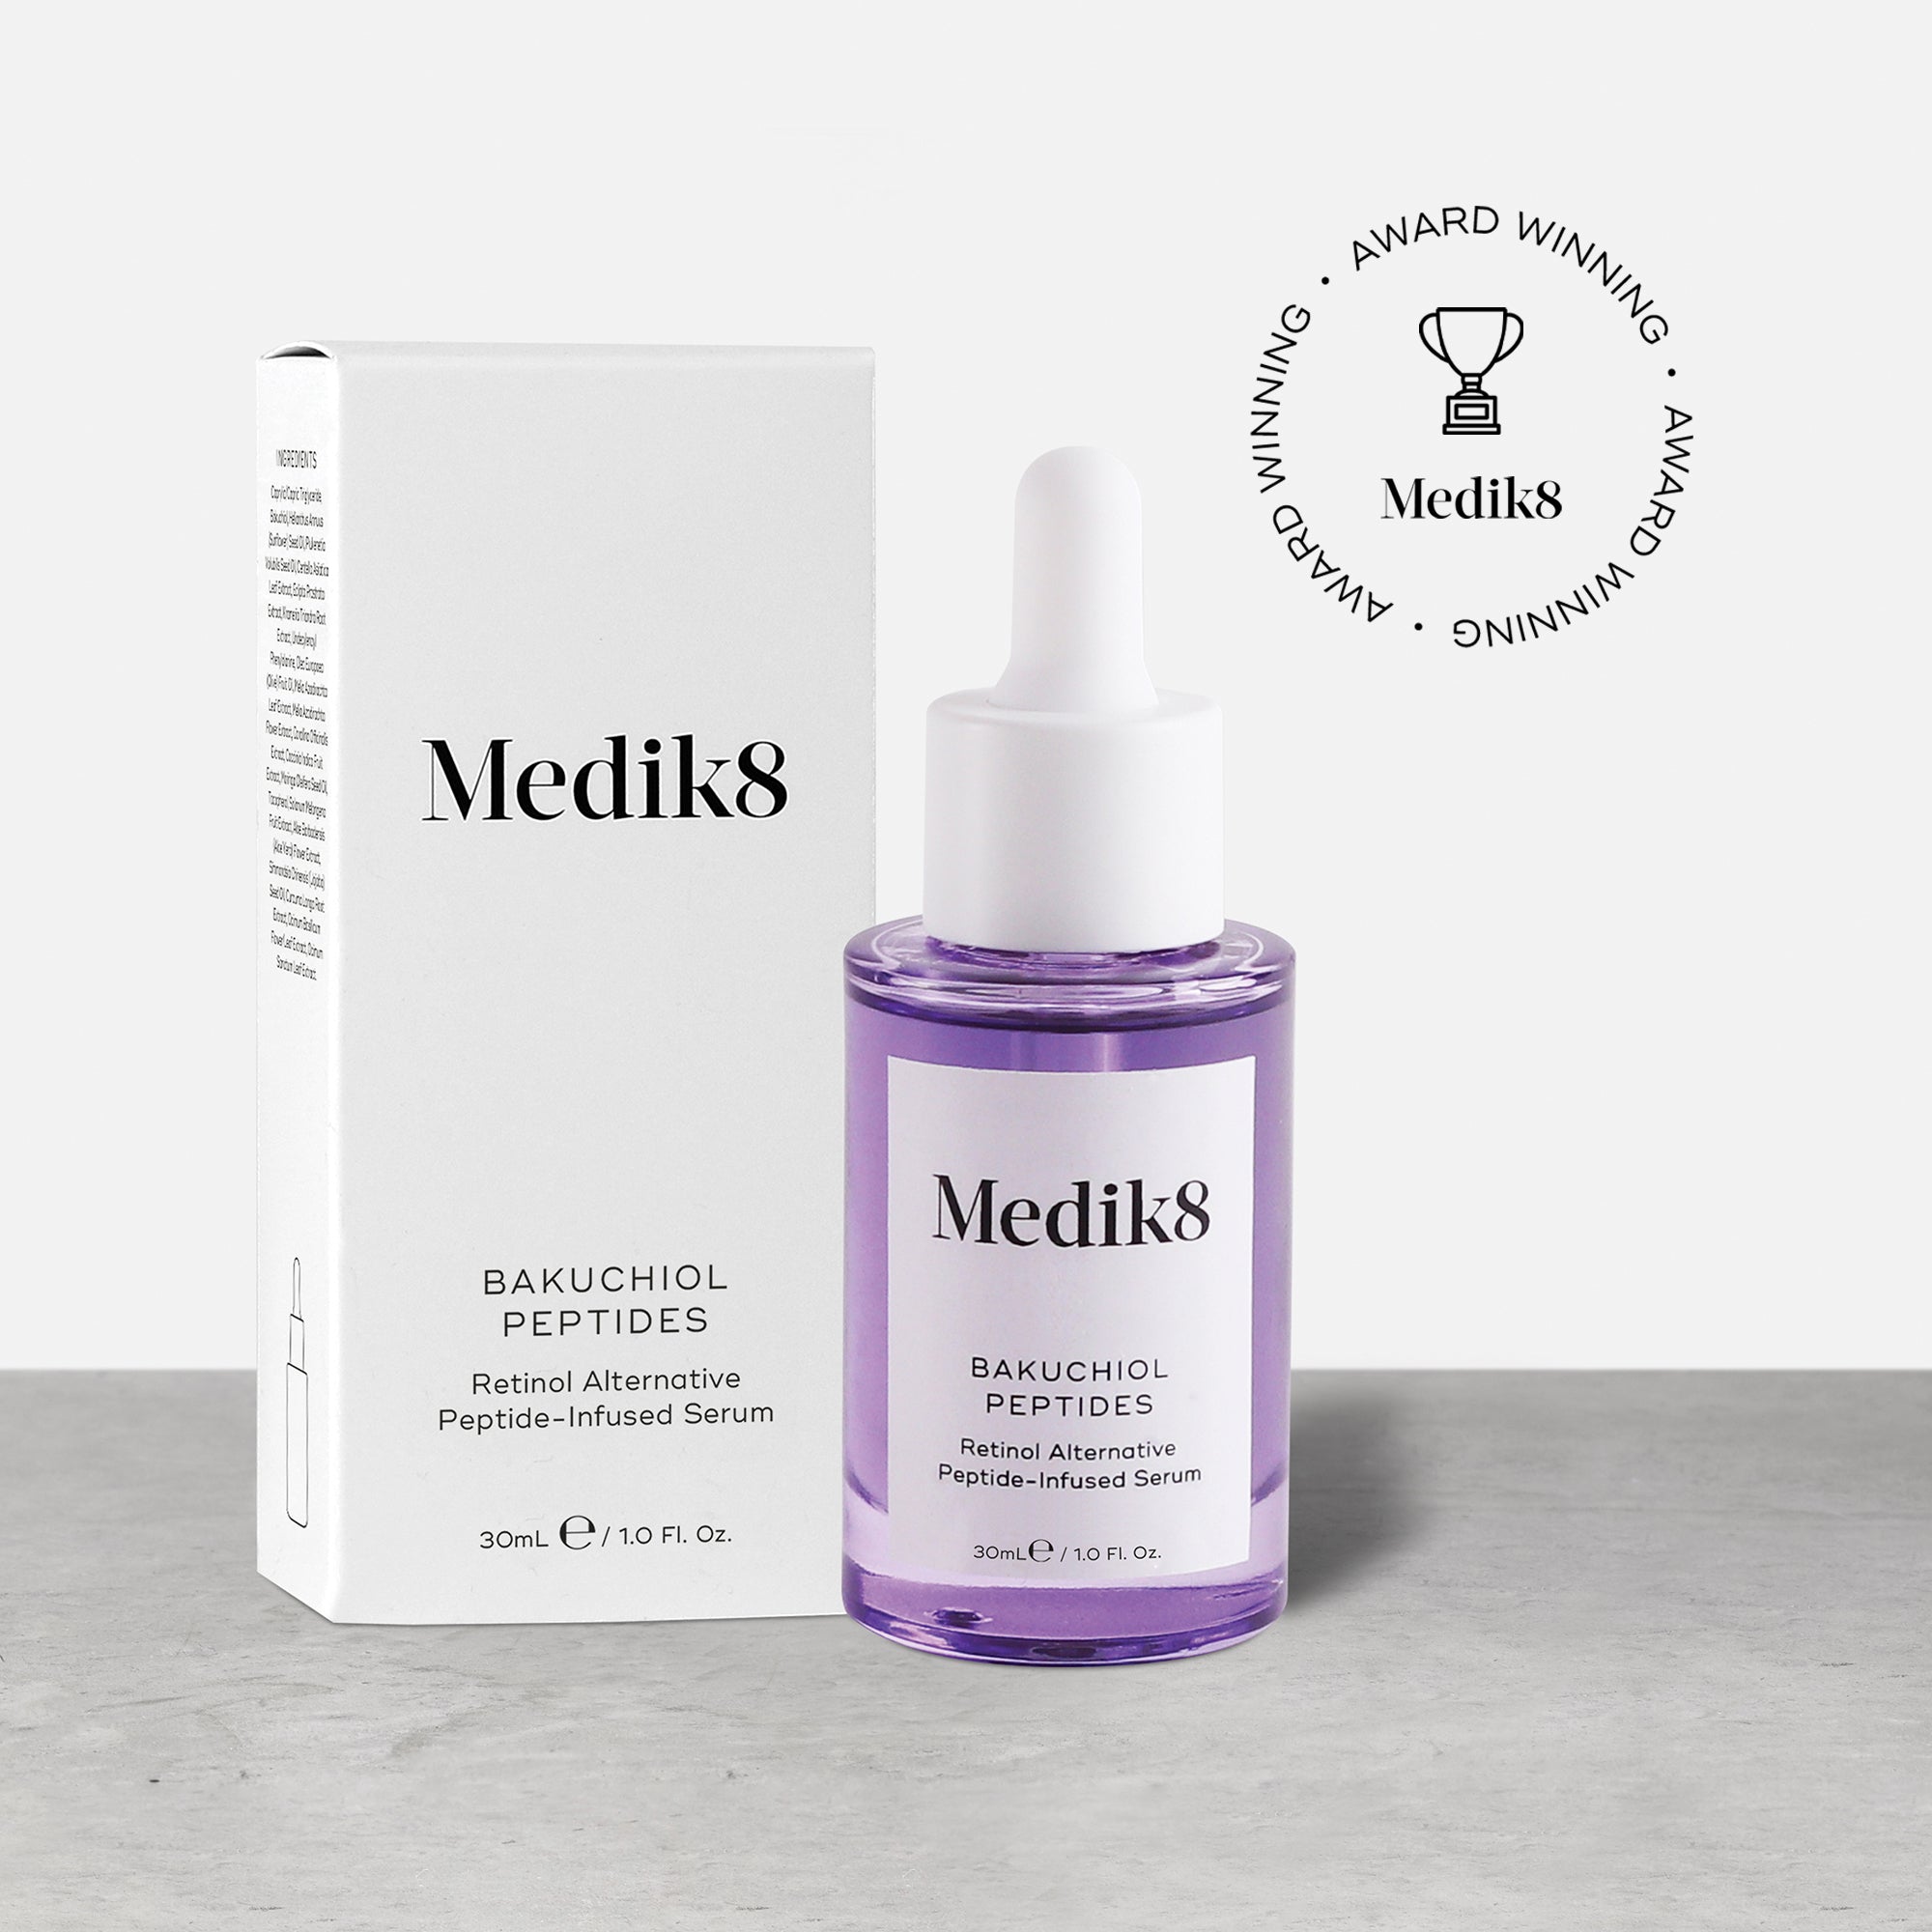 Bakuchol Peptides™ by Medik8. A Retinol Alternative Peptide-Infused Serum